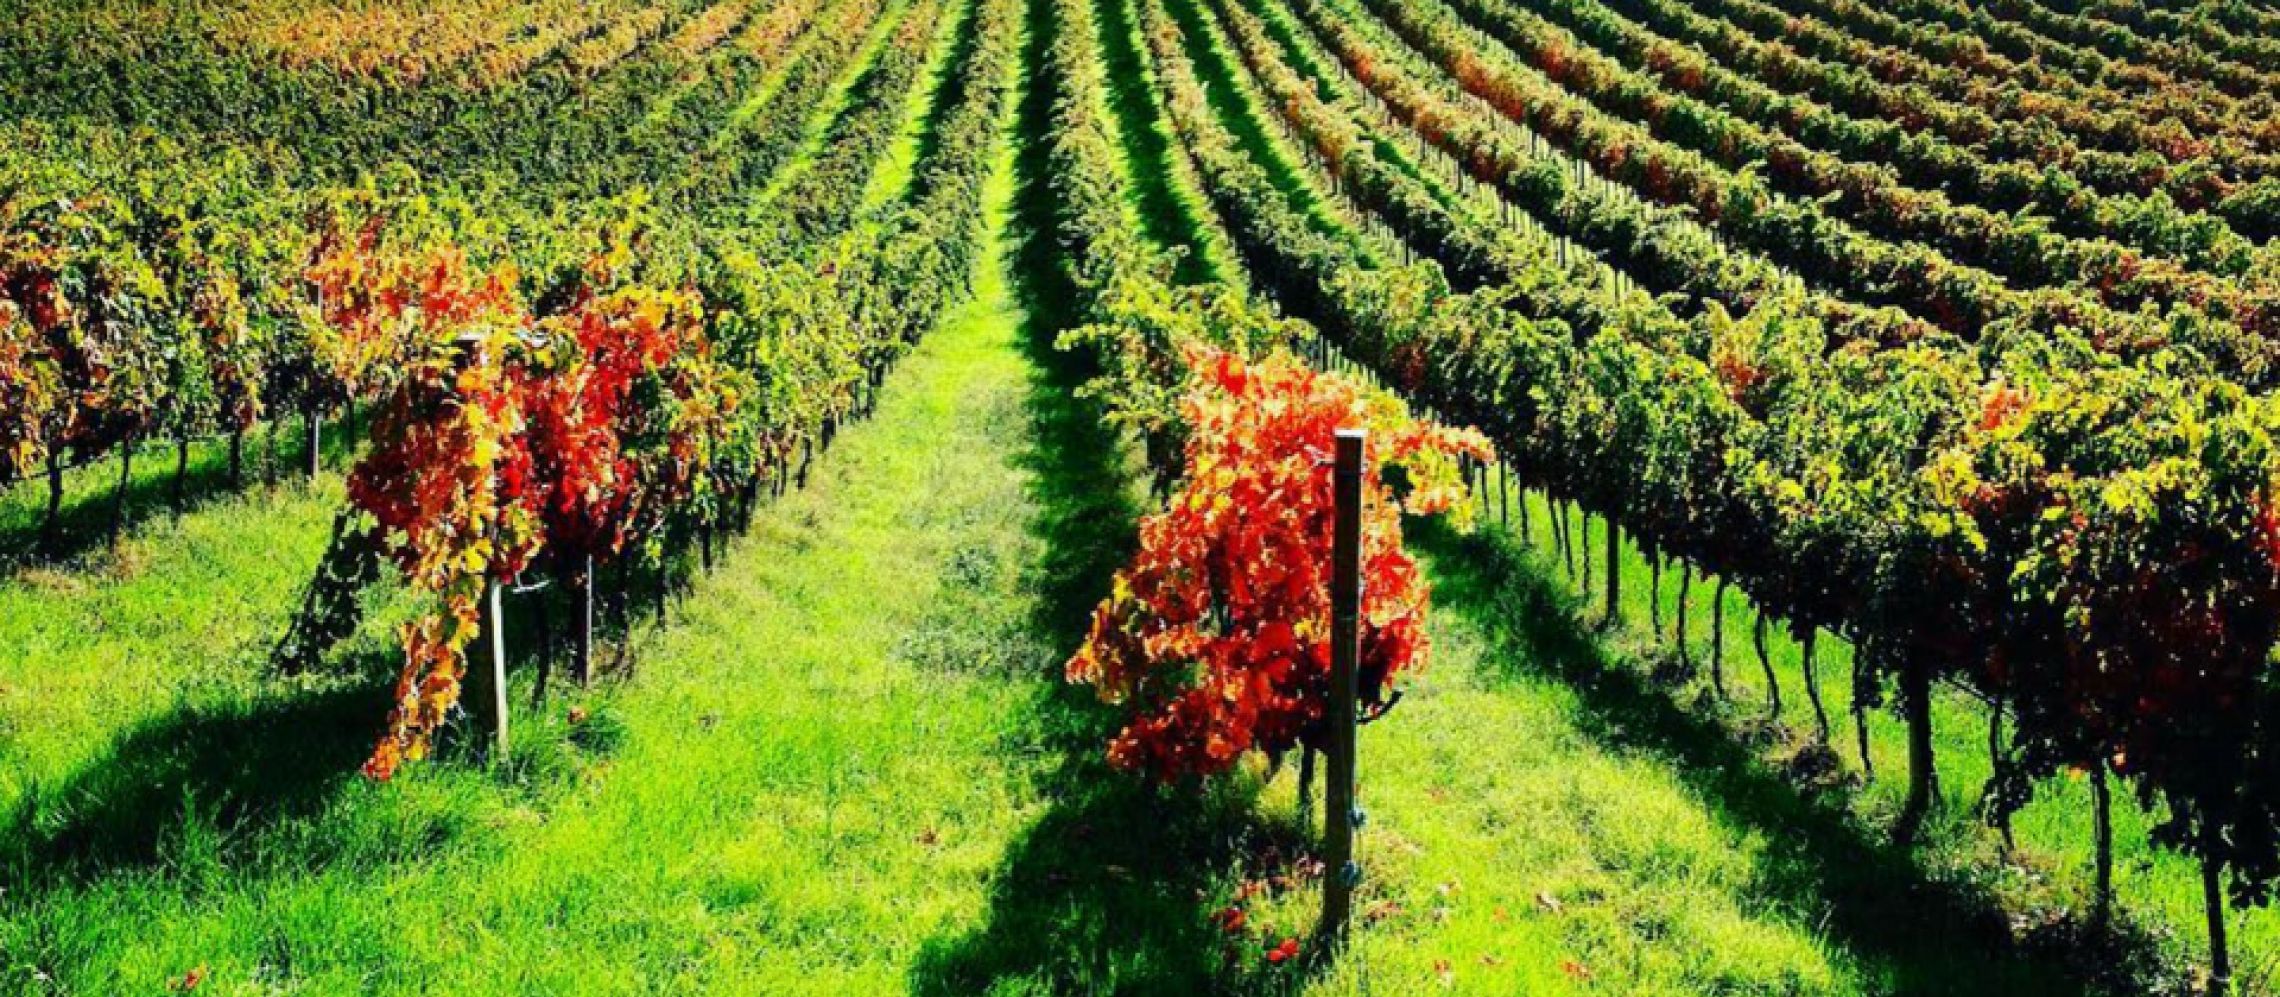 Photo for: Velenosi Vini- Exploring World of Wines from Italy